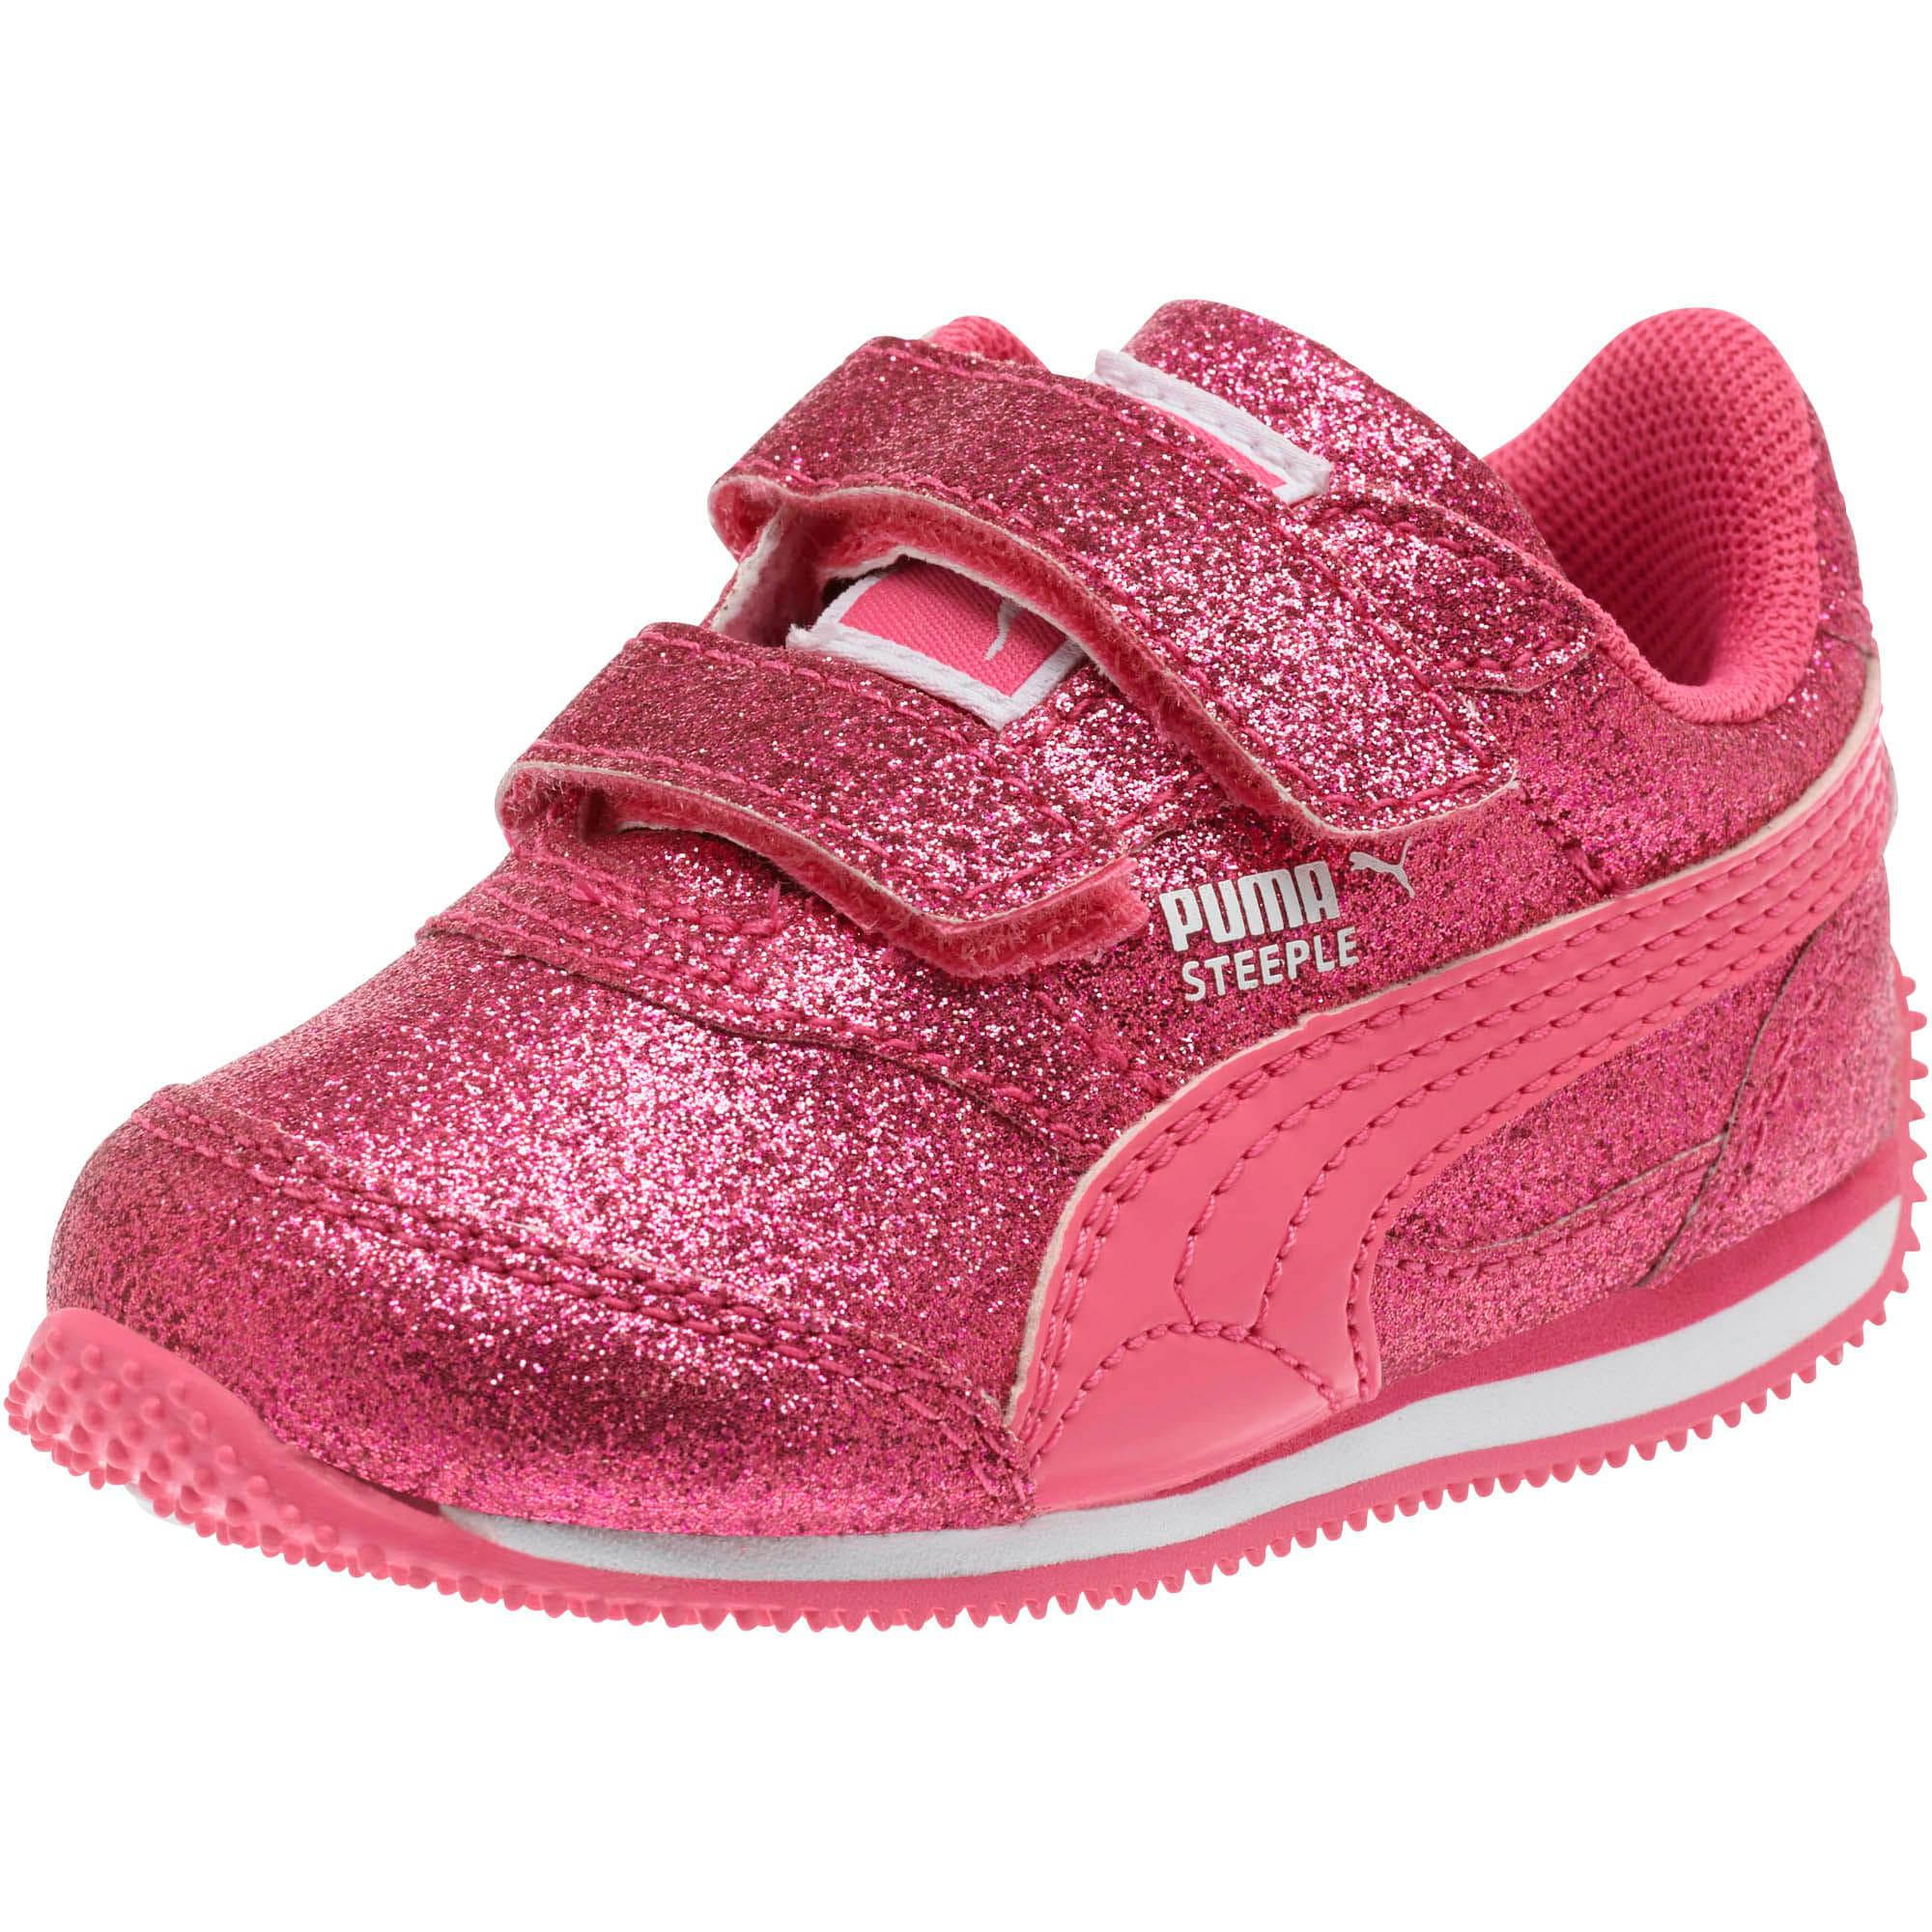 puma infant toddler shoes